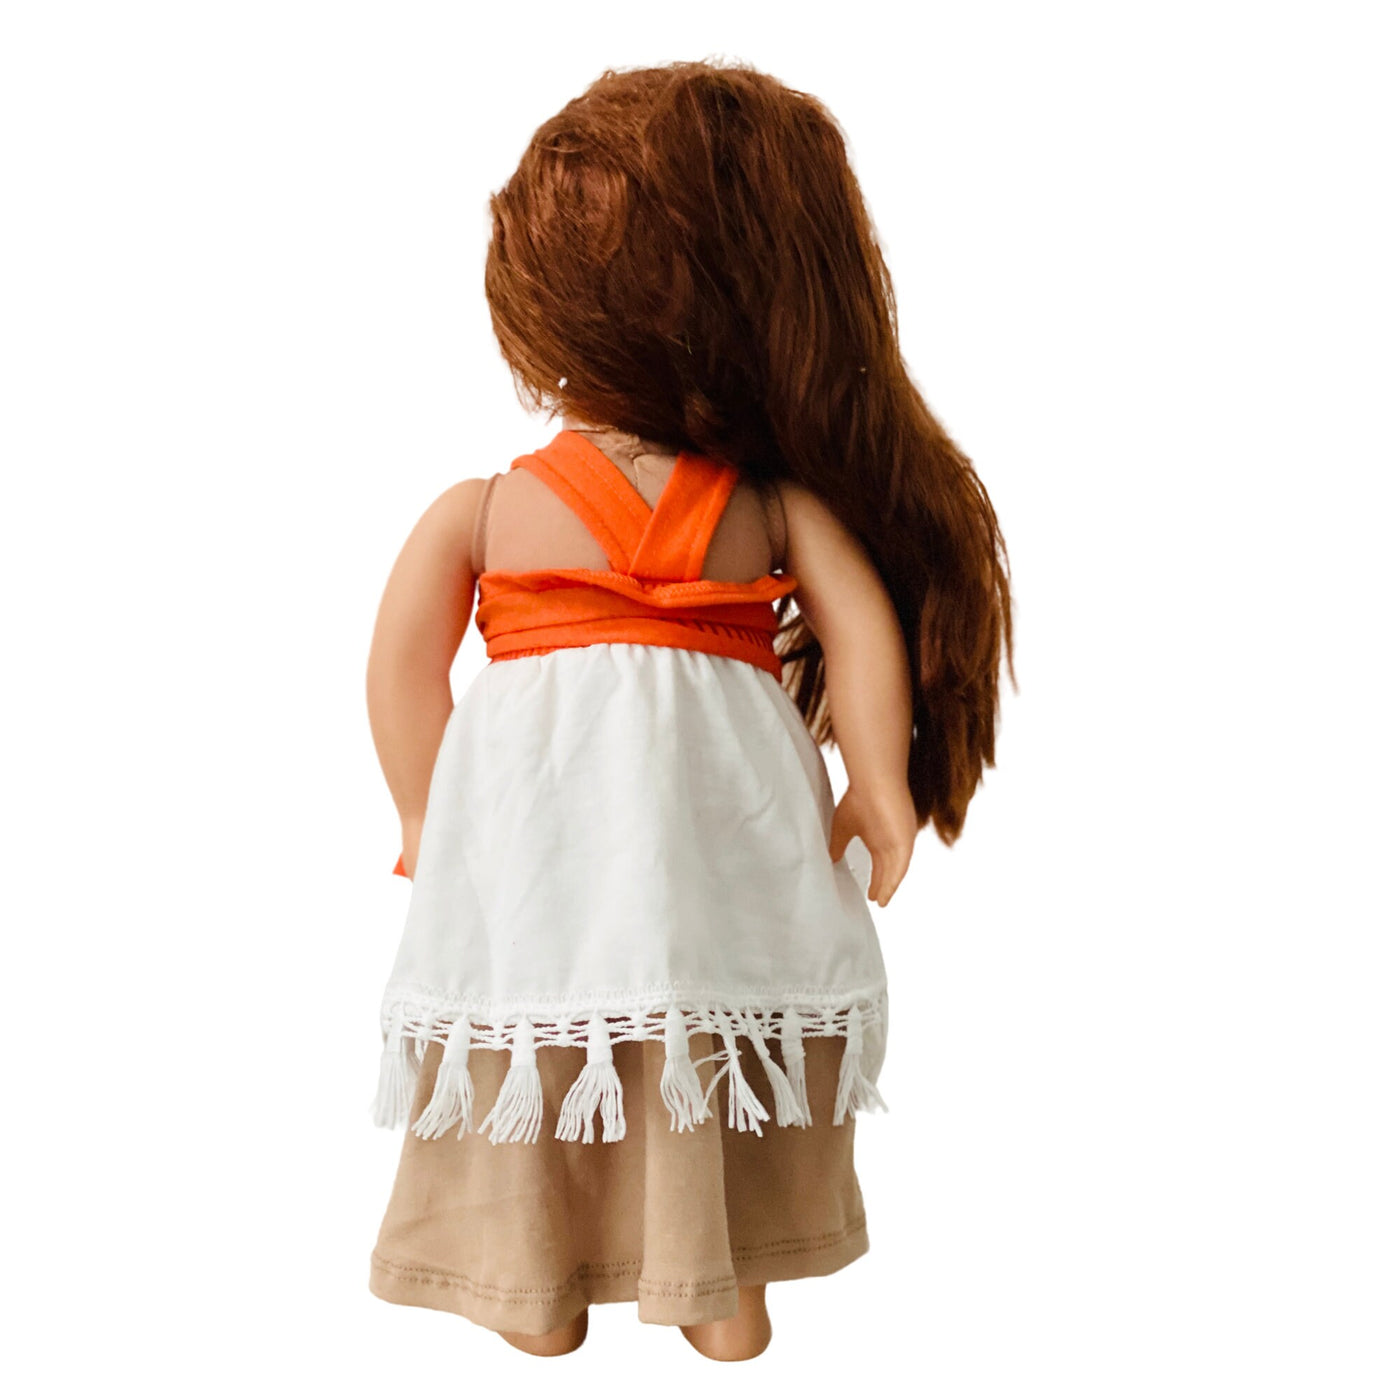 Pacific Island doll dress